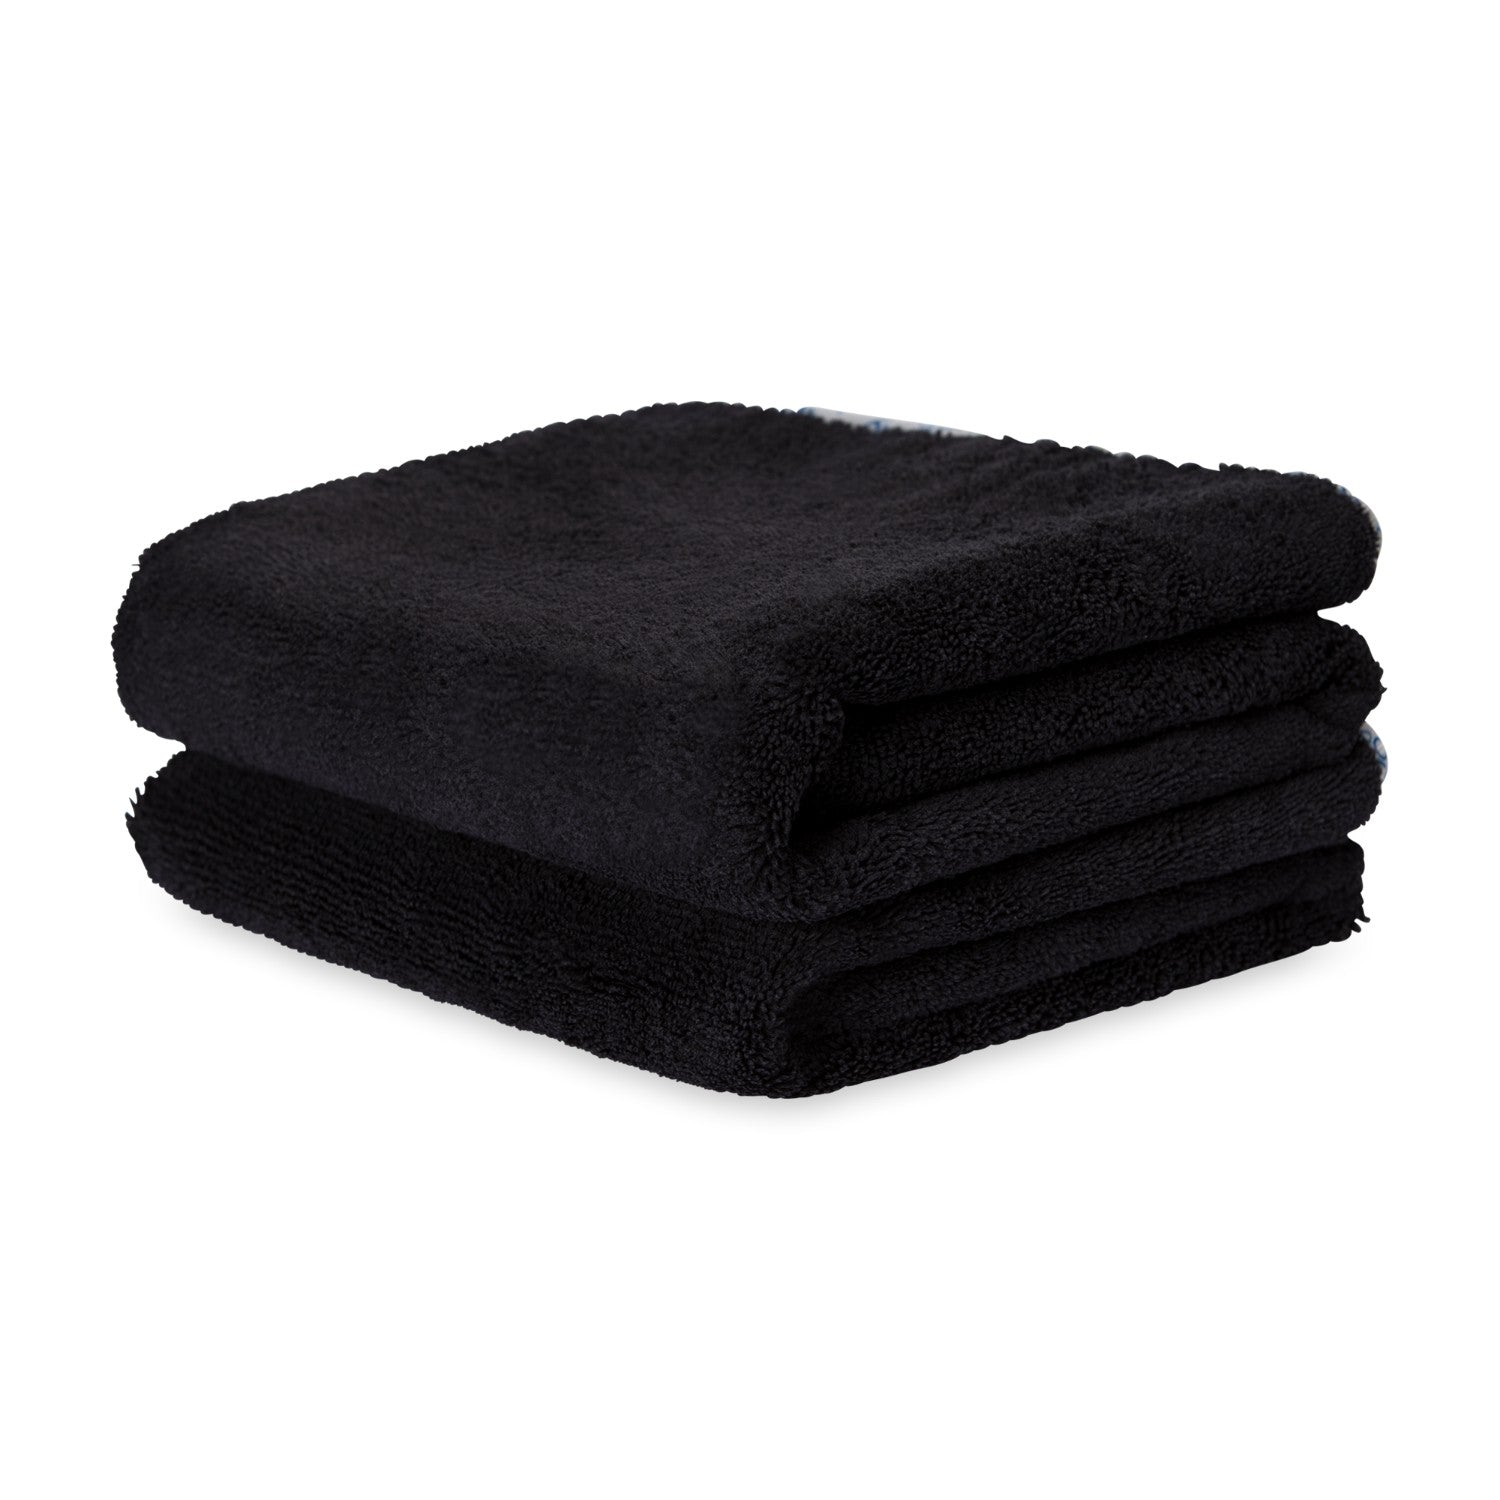 Black Microfiber Car Drying Towel Great For Tires